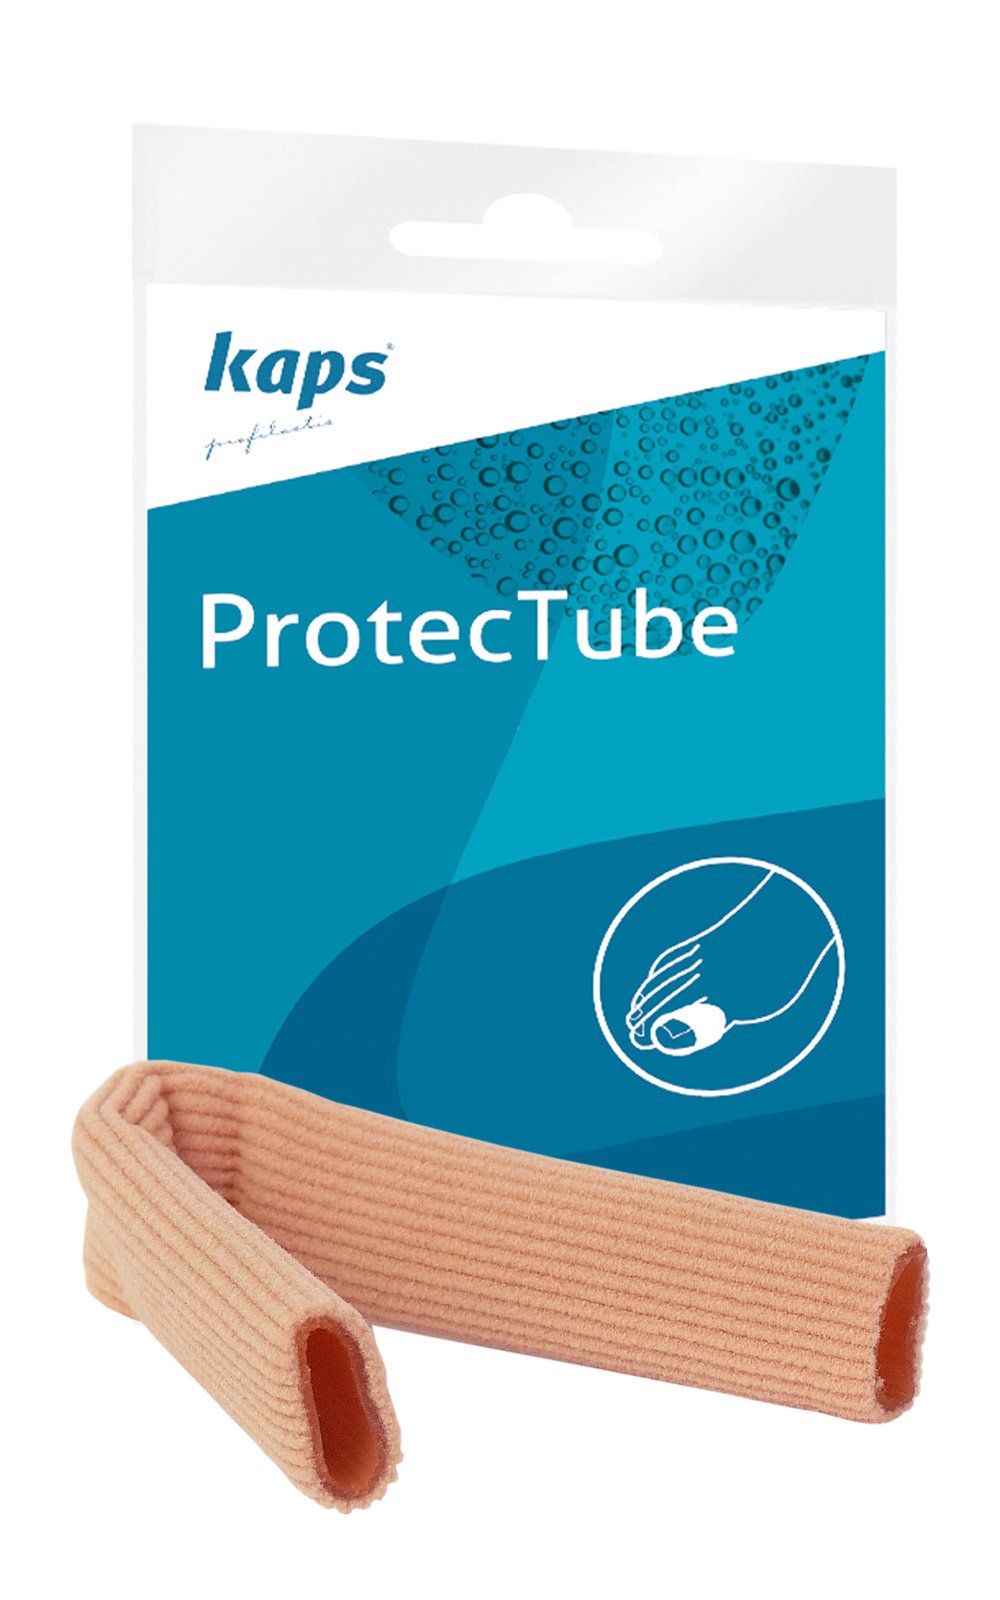 [Australia] - Toe Tube, Sleeve Protectors, Blisters Corns Calluses Relief, Kaps Protectube Medium - diameter 2.5-3 cm 